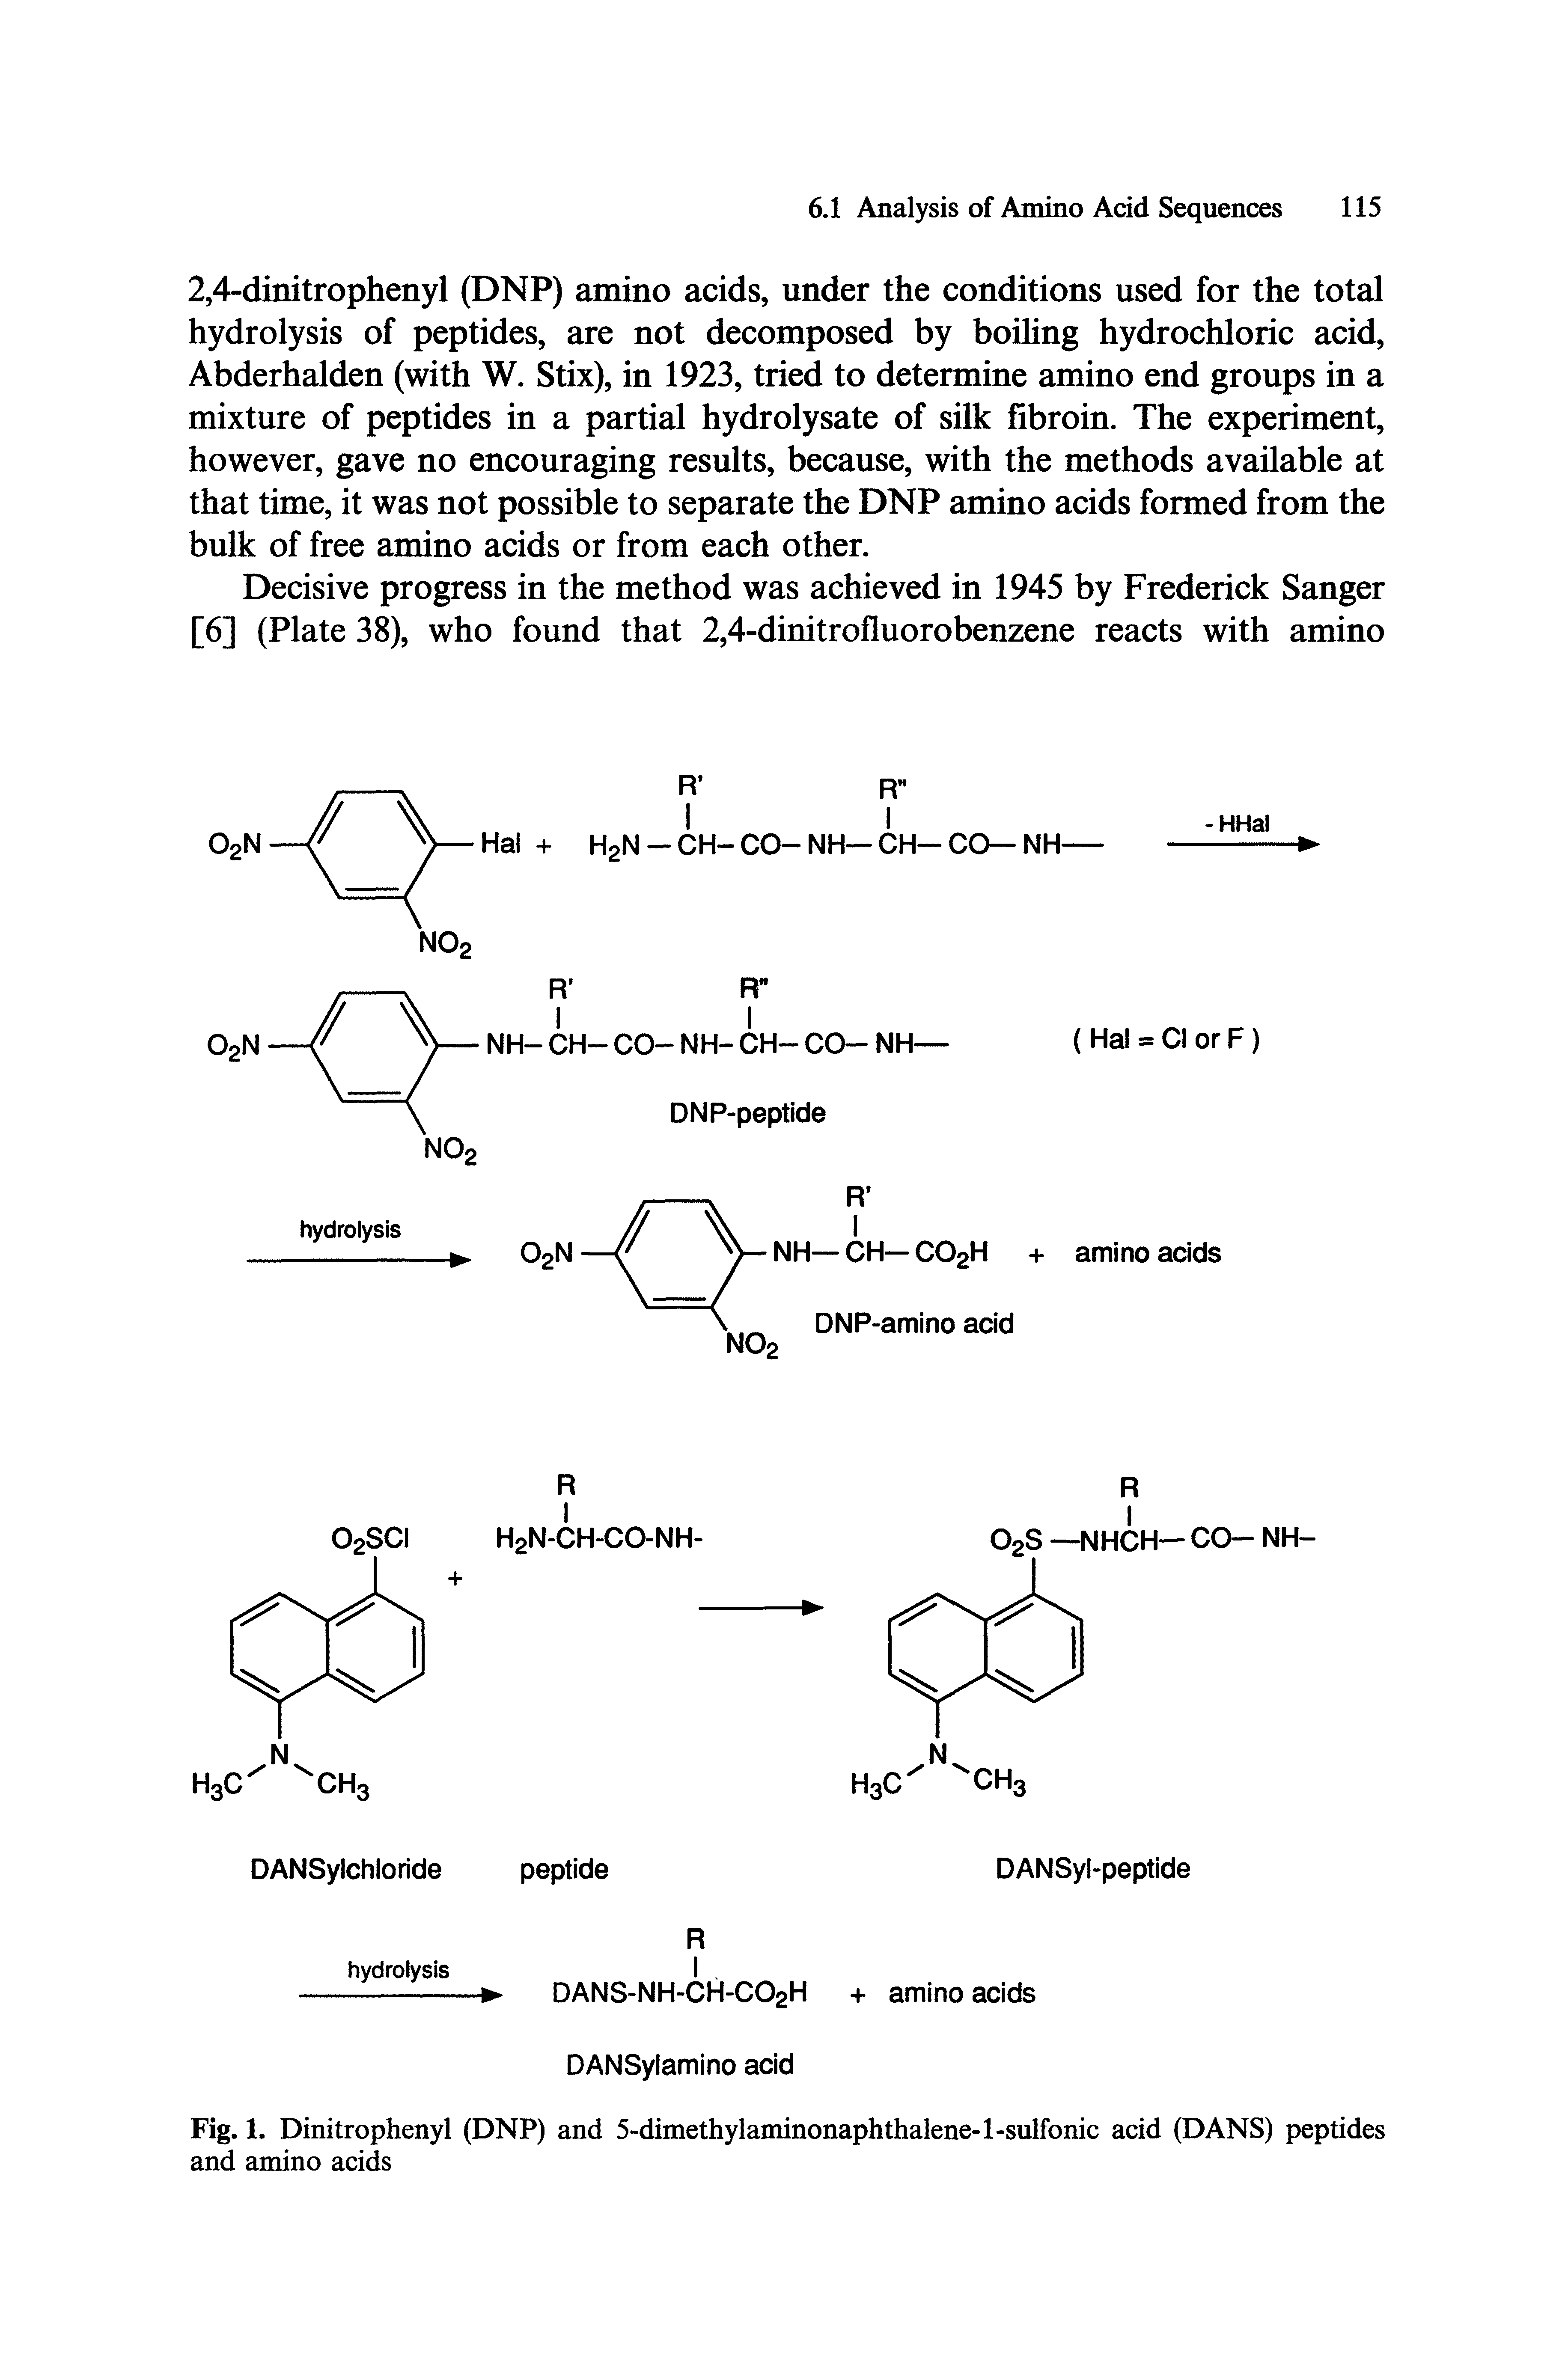 Fig. 1. Dinitrophenyl (DNP) and 5-dimethylaminonaphthalene-l-sulfonic acid (DANS) peptides and amino acids...